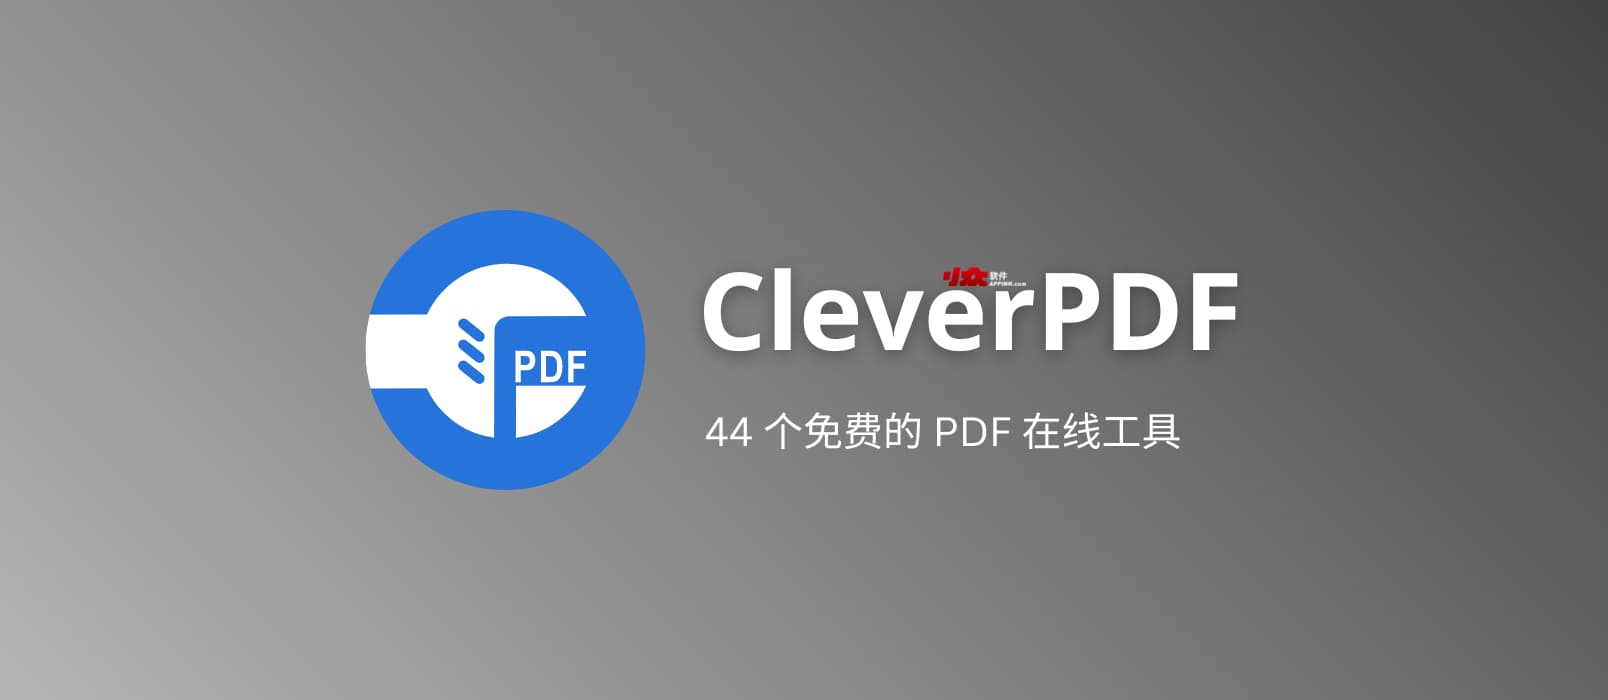 CleverPDF - 44 个免费的 PDF 在线工具：PDF 转 Word、解密、拆分、合并等